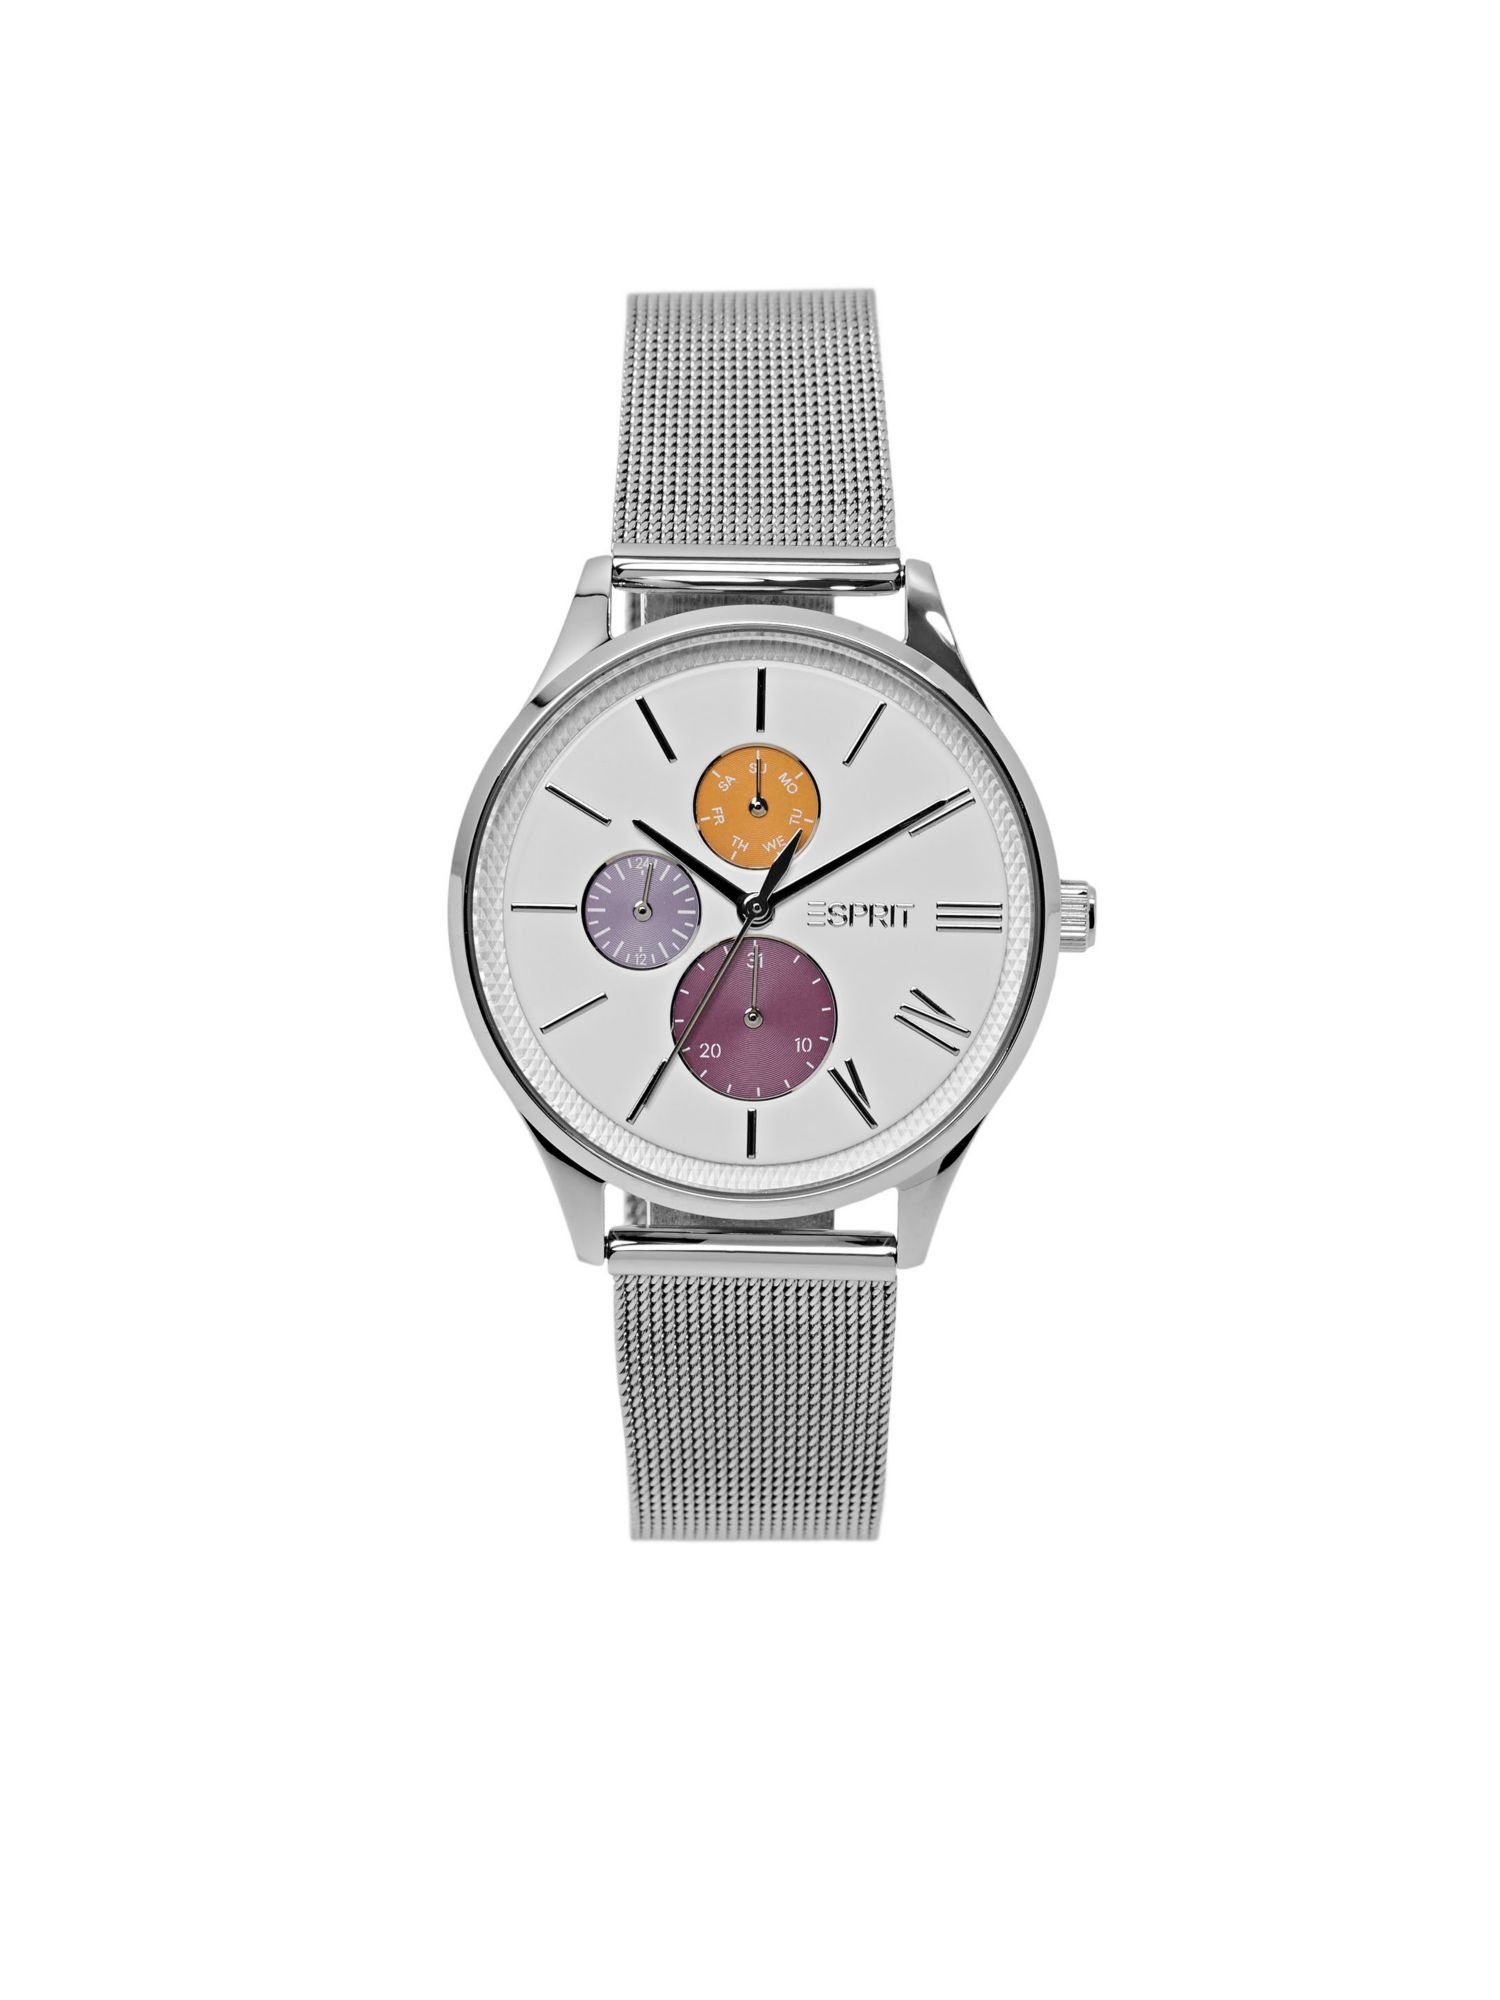 Esprit Chronograph Multifunktionale Uhr mit Mesh-Armband | Quarzuhren